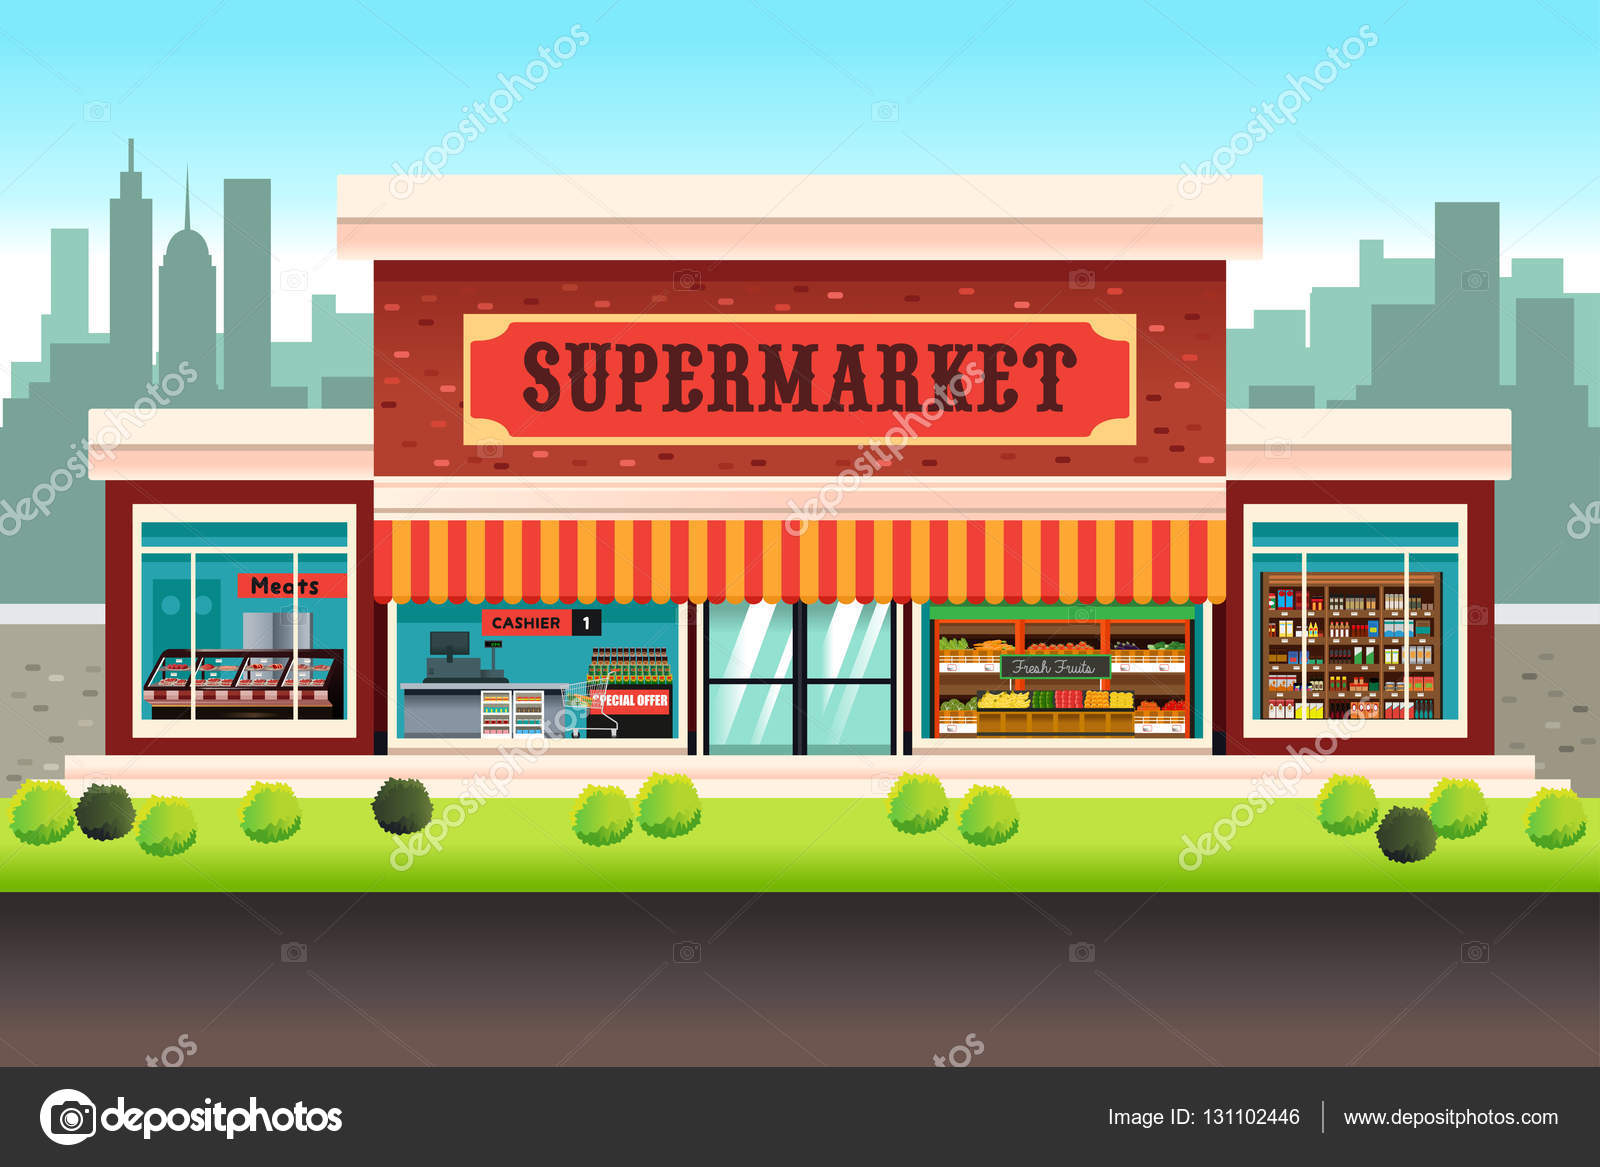 depositphotos_131102446-stock-illustration-supermarket-grocery-store.jpg